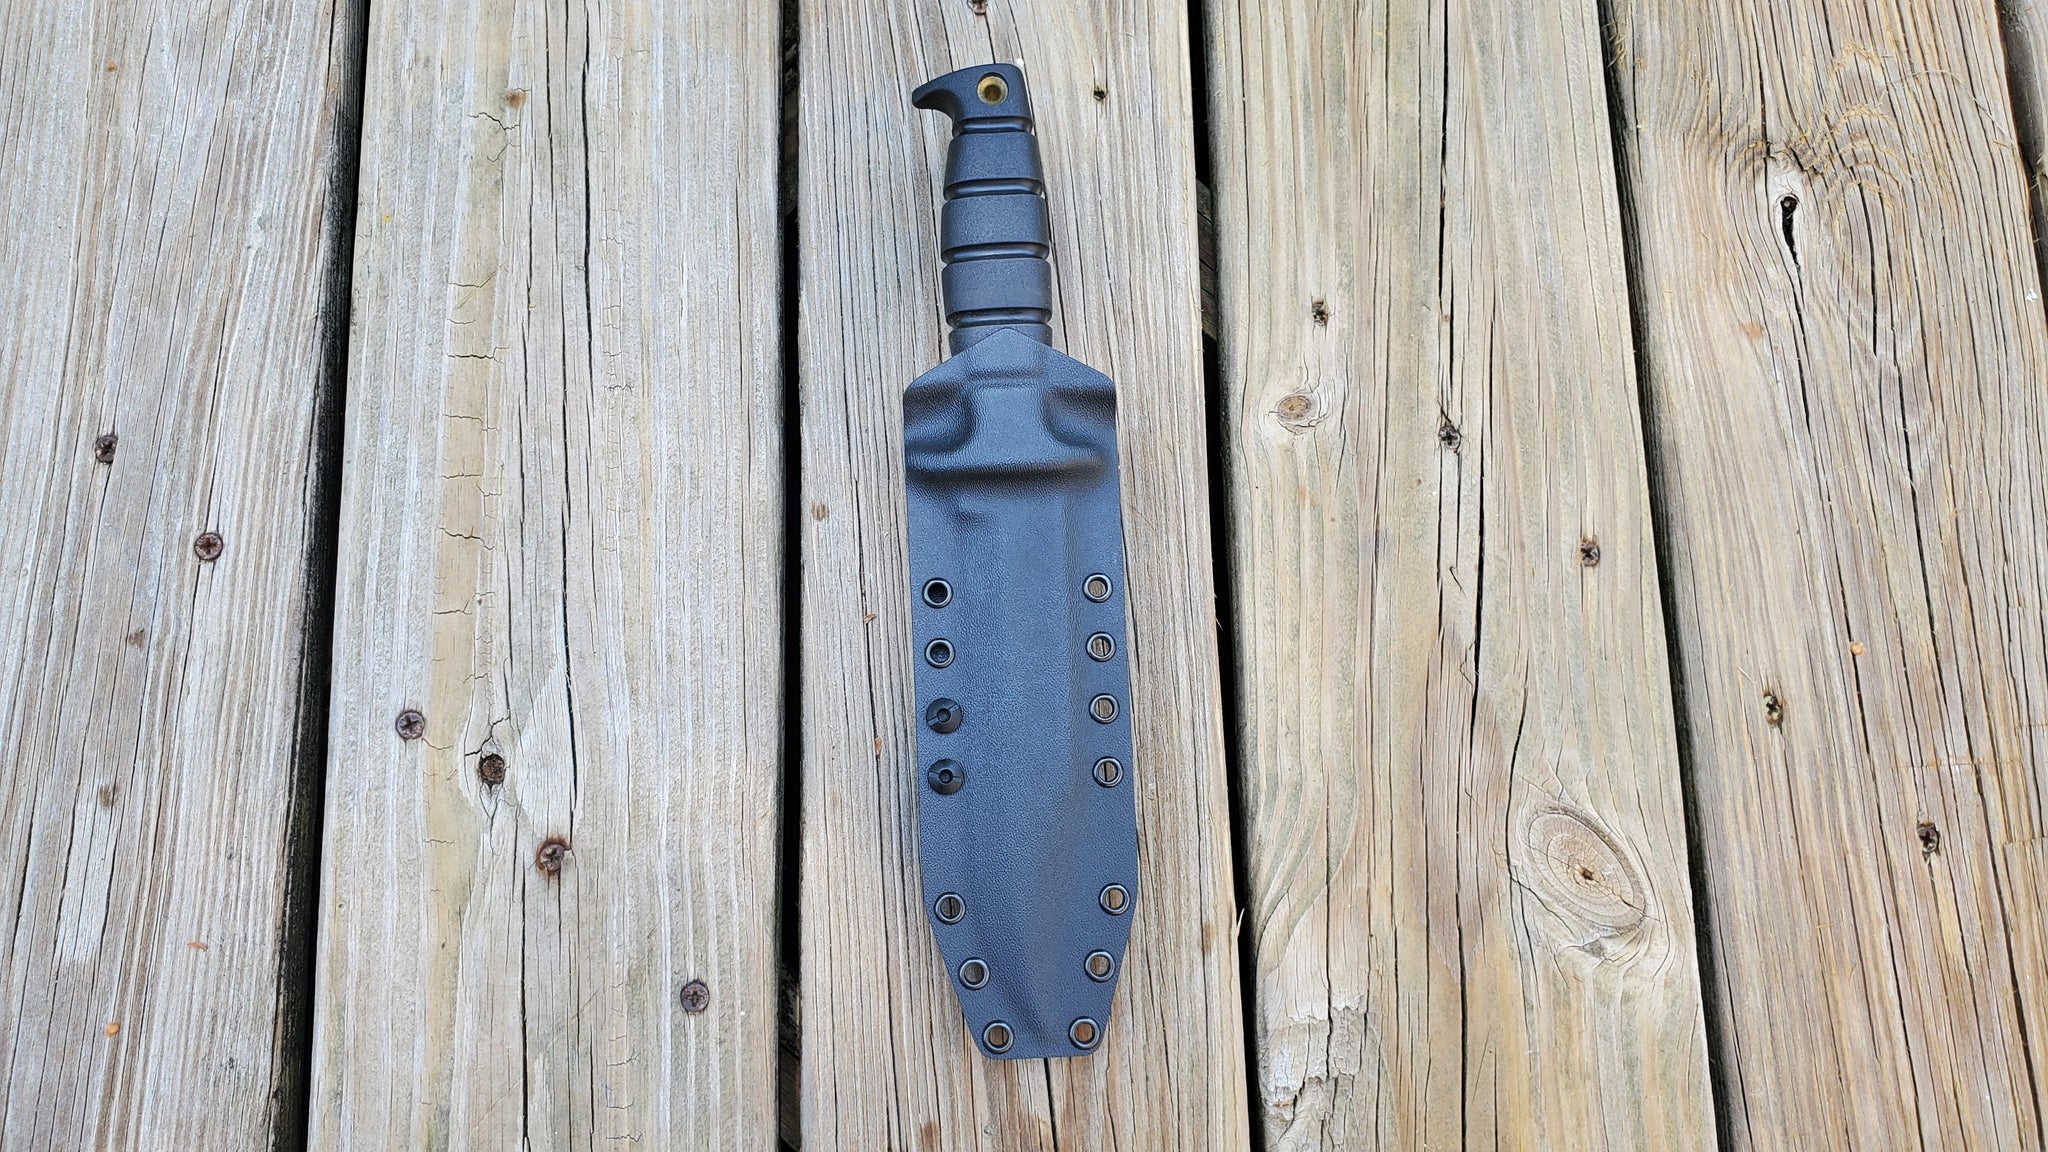 ONTARIO KNIFE COMPANY SPEC PLUS "SP1-95" KNIFE KYDEX sheath and J-Clip